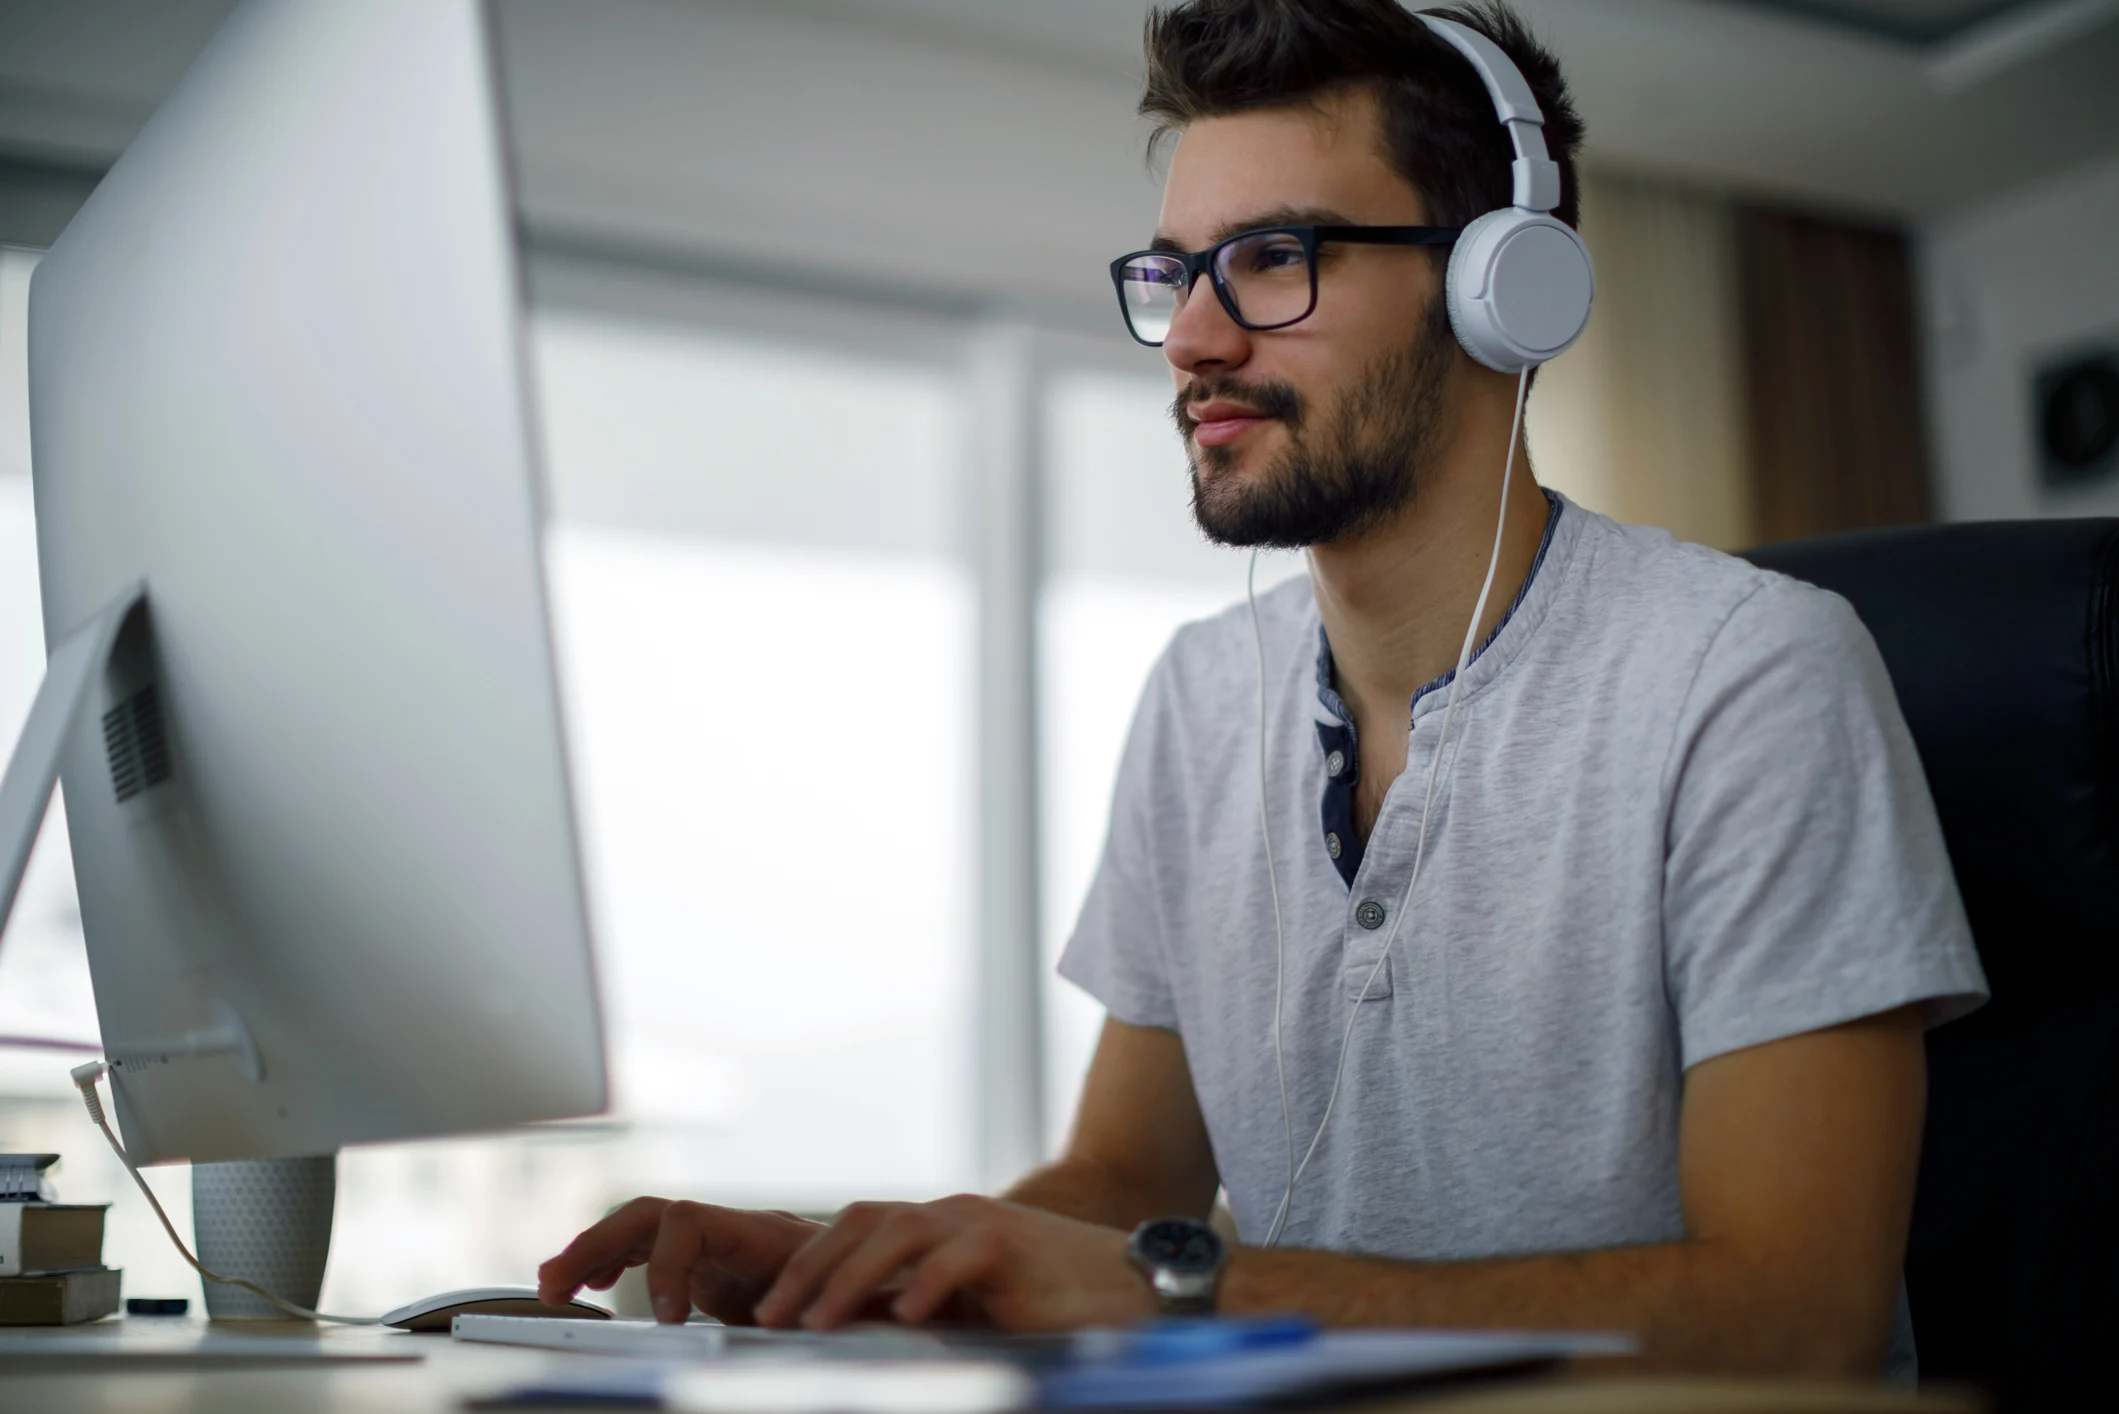 Man on desktop with headphones on